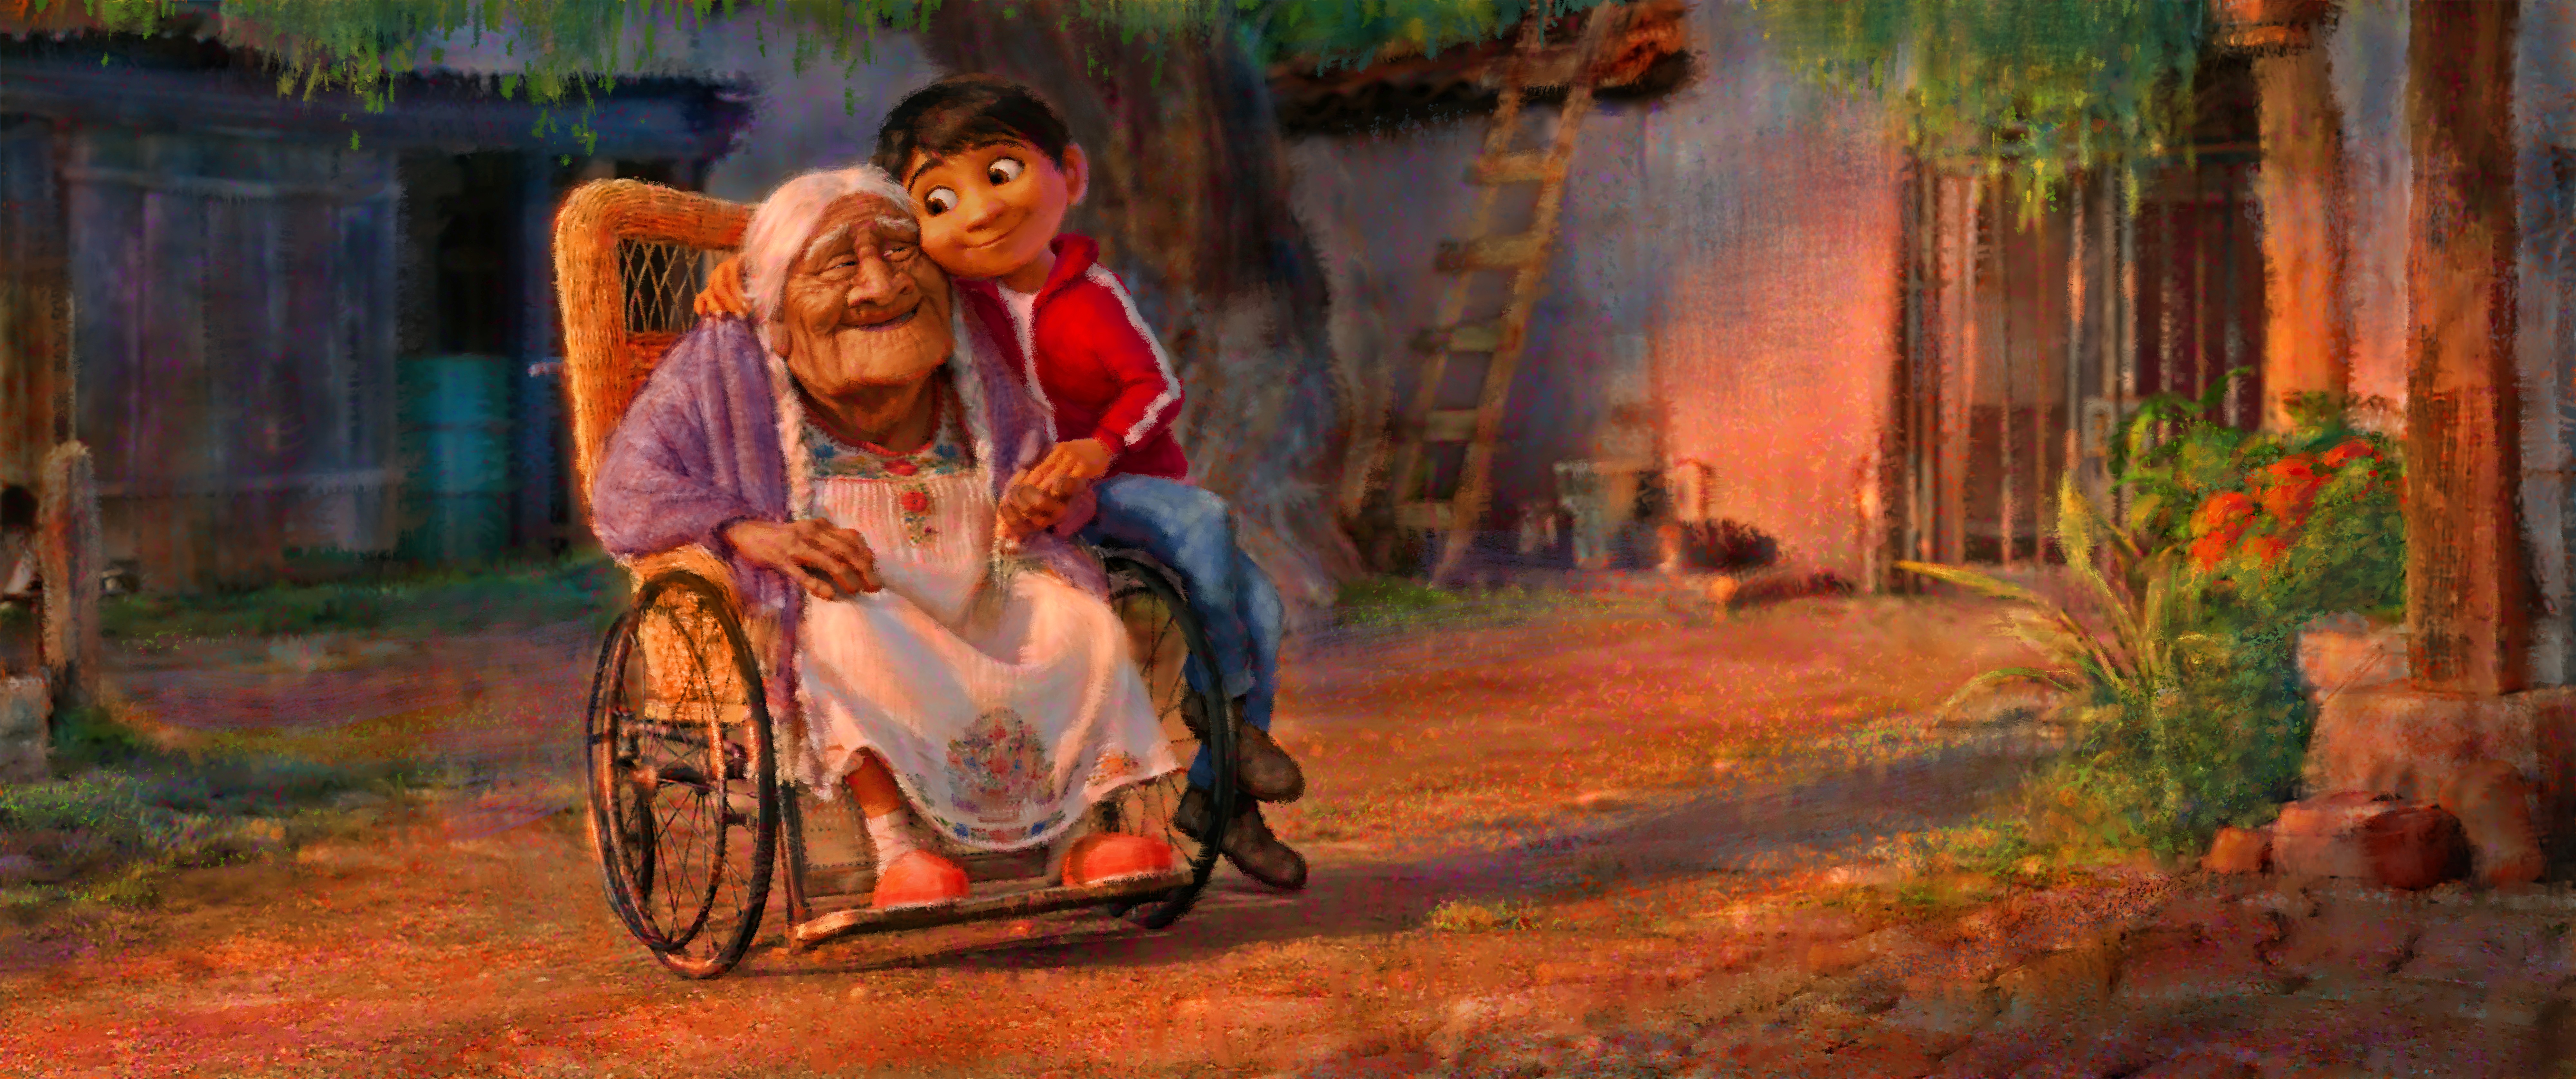 Disney Pixar Coco Image HD Wallpaper And Background Photos